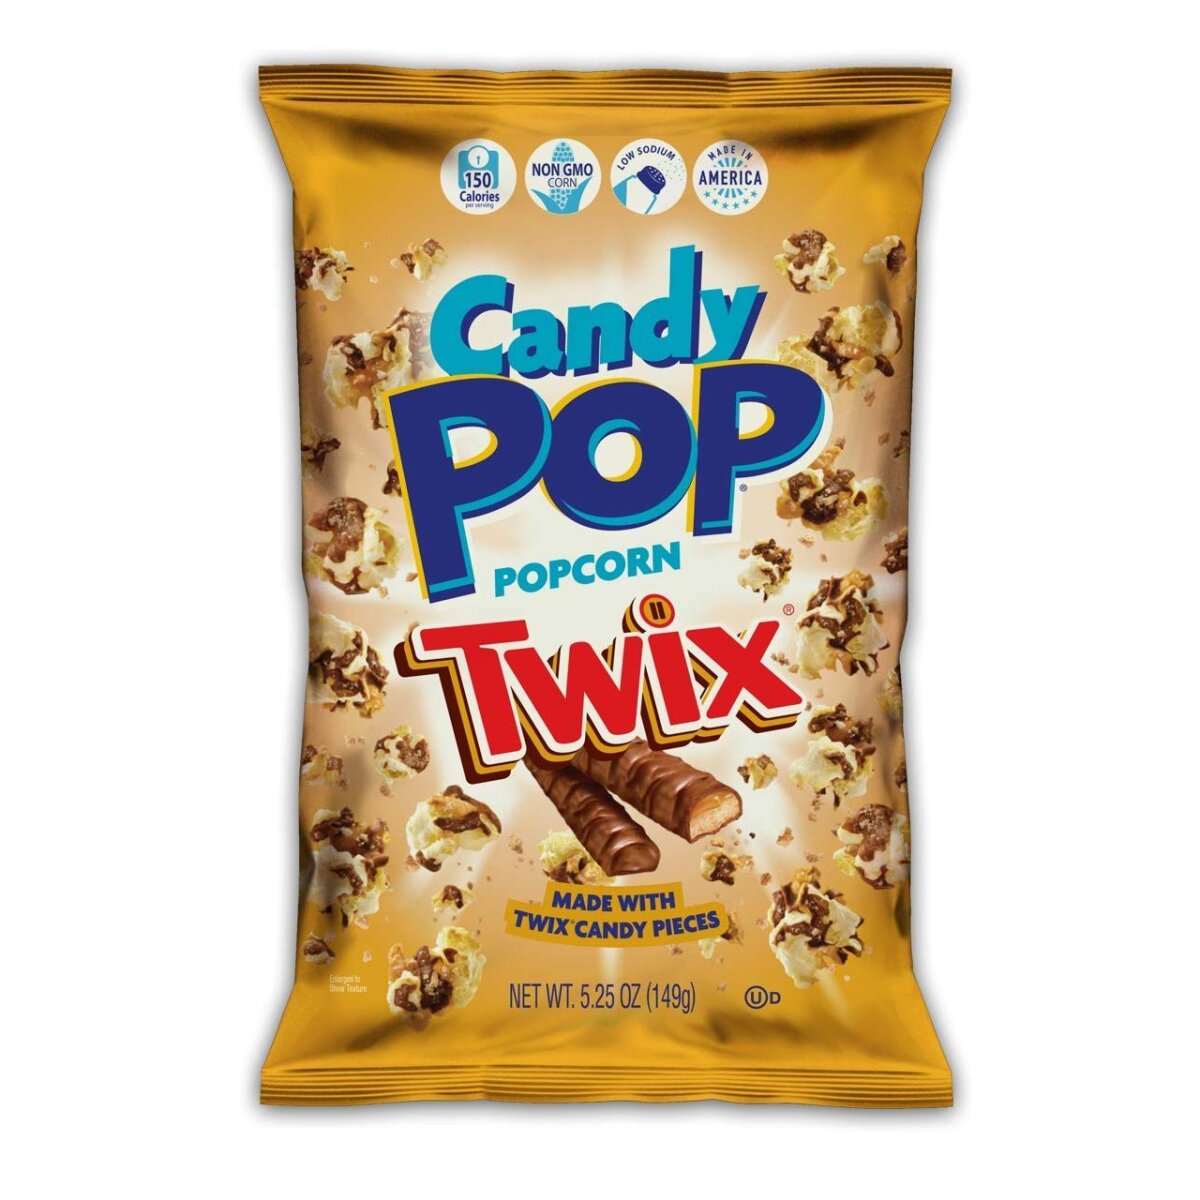 Candy Pop Twix - Popcorn